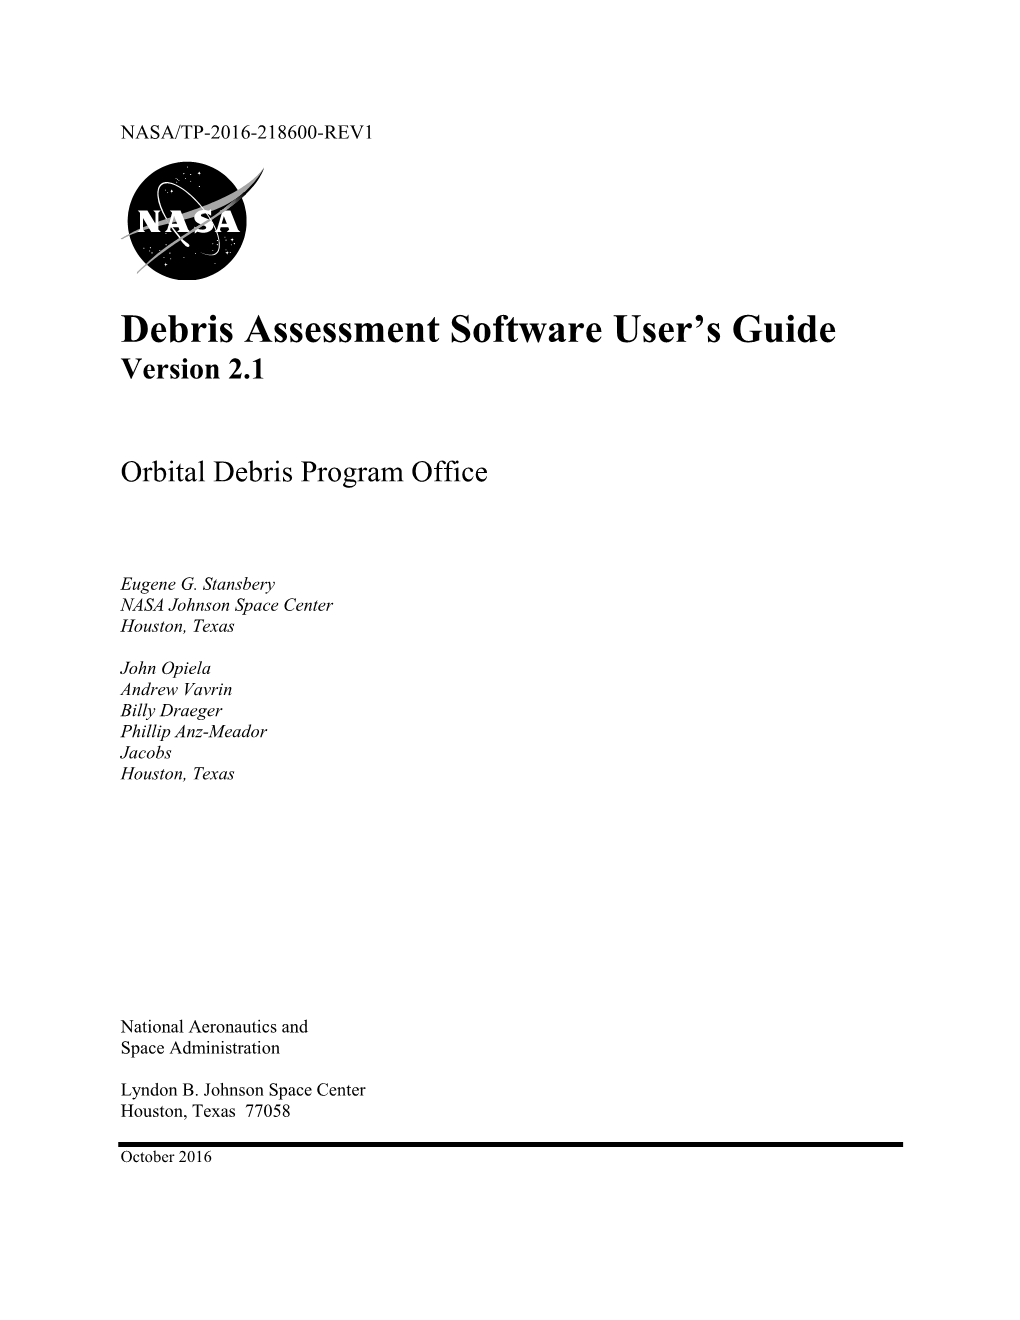 Debris Assessment Software User’S Guide Version 2.1